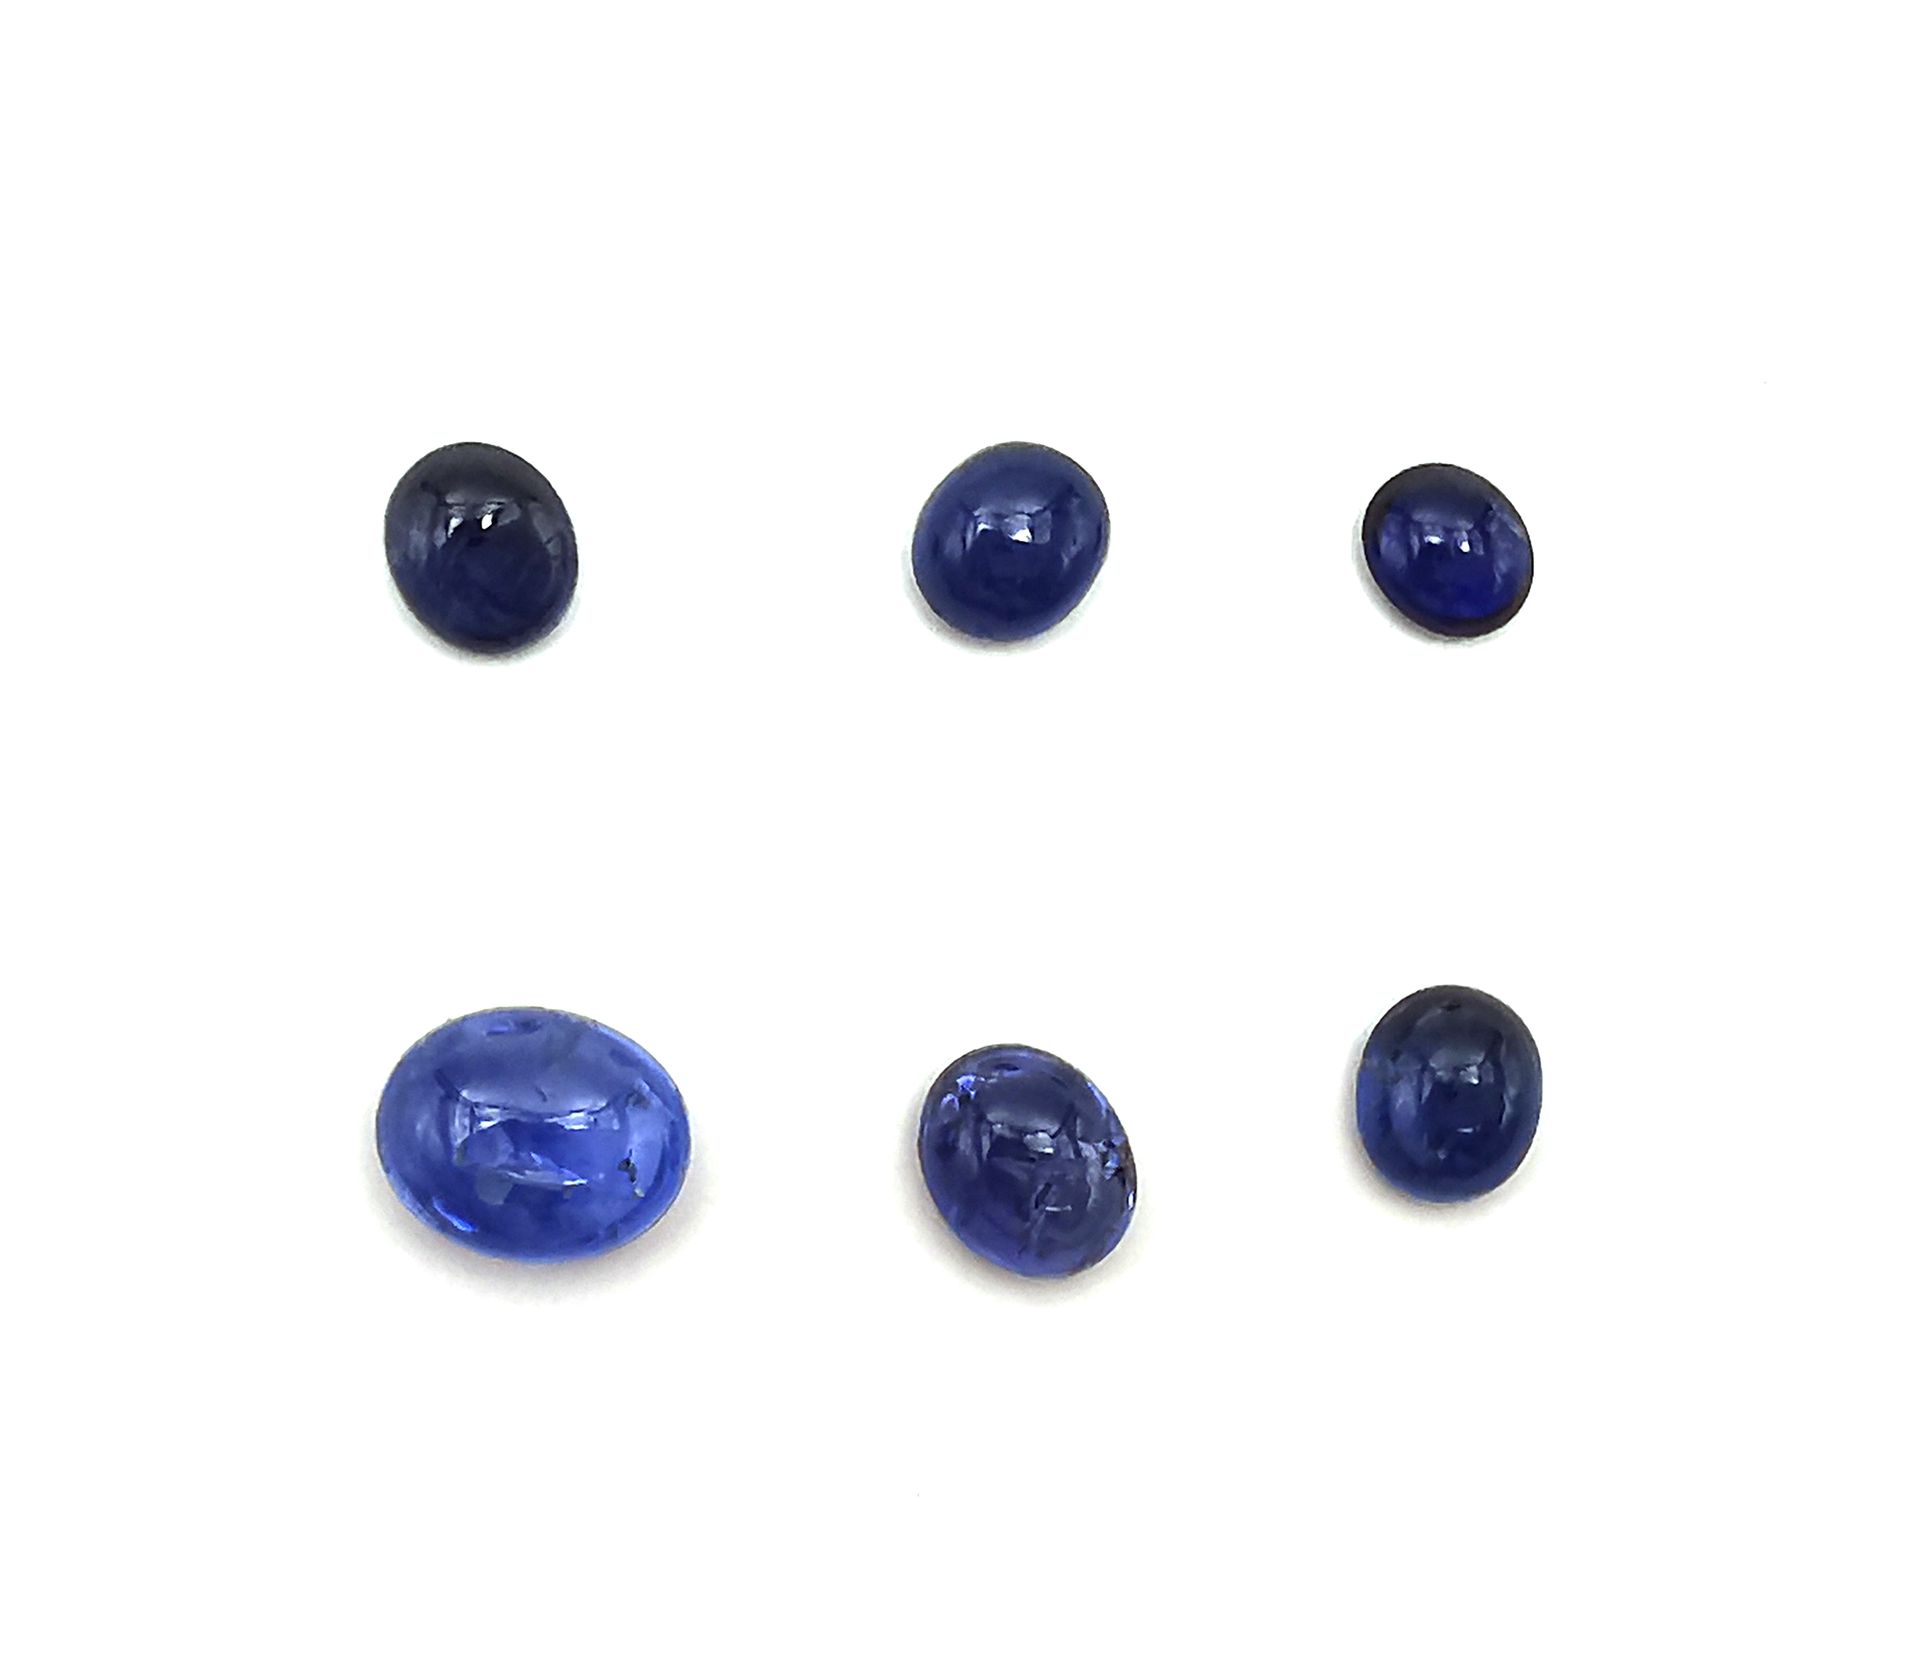 Null 六颗凸圆形切割的锡兰蓝宝石拍品

一个附有2021年9月15日的LFG预报告

蓝宝石的总重量：13.81克拉